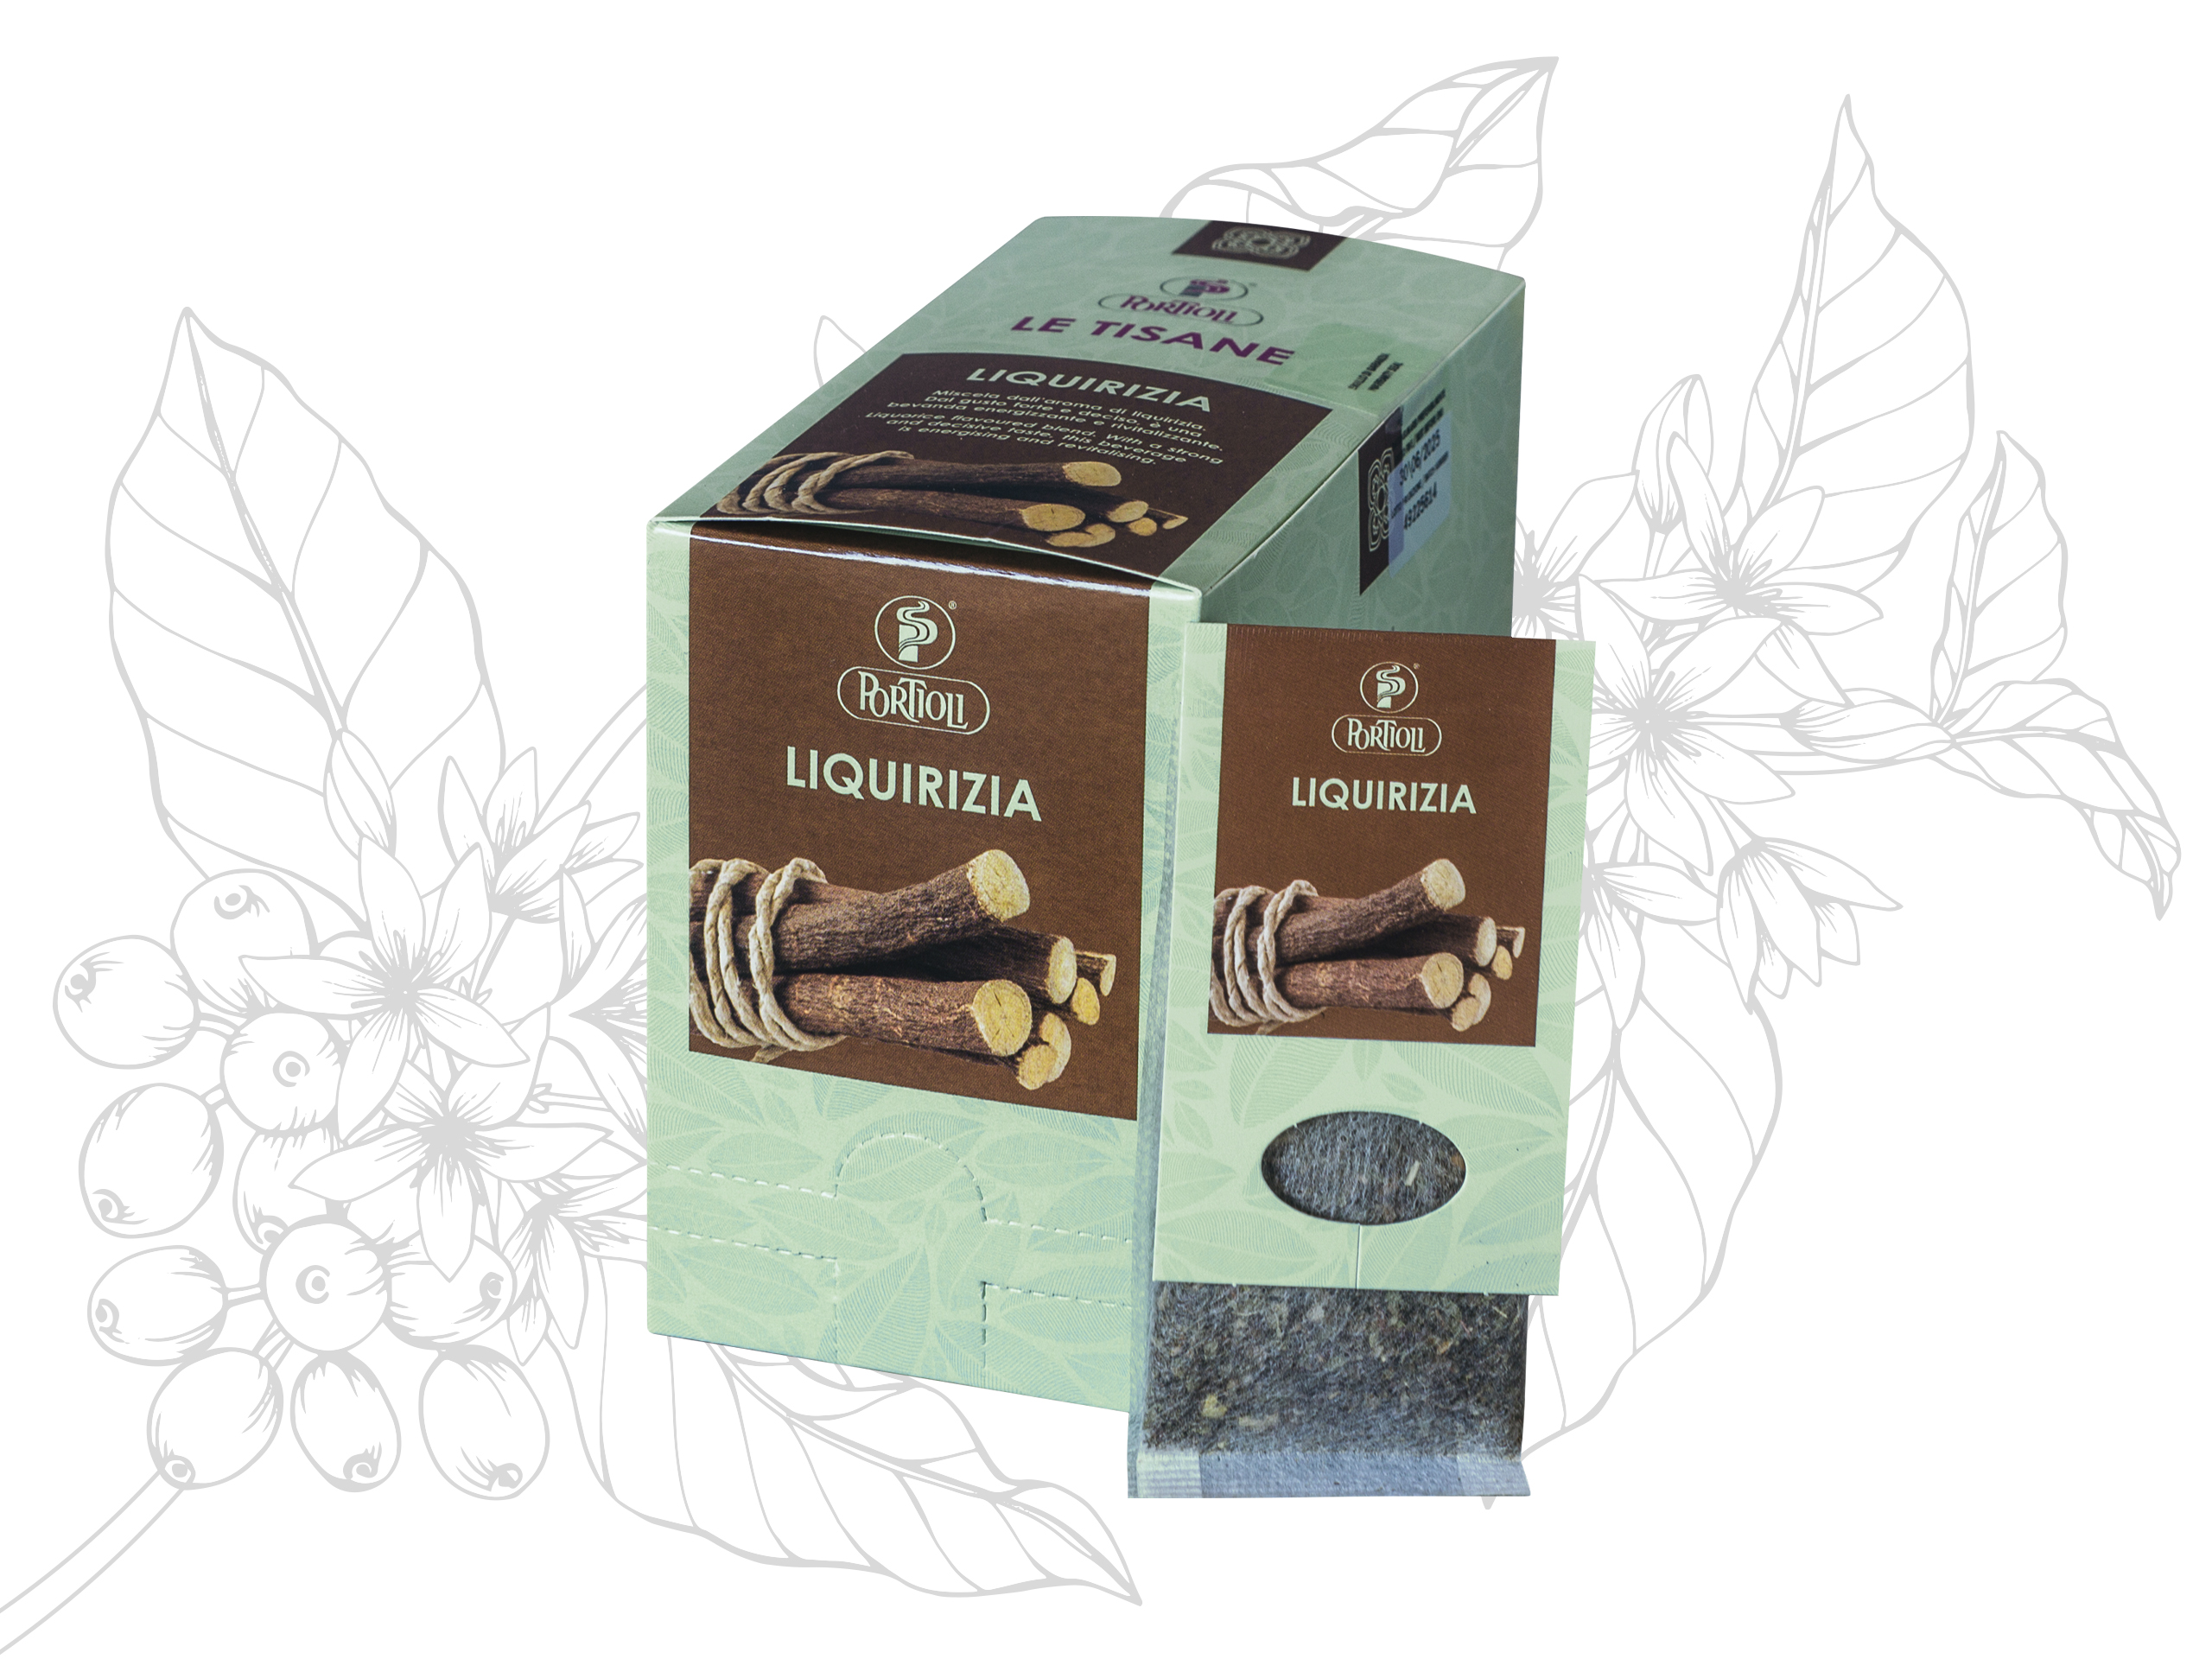 Portioli Liquirizia Herbal Tea